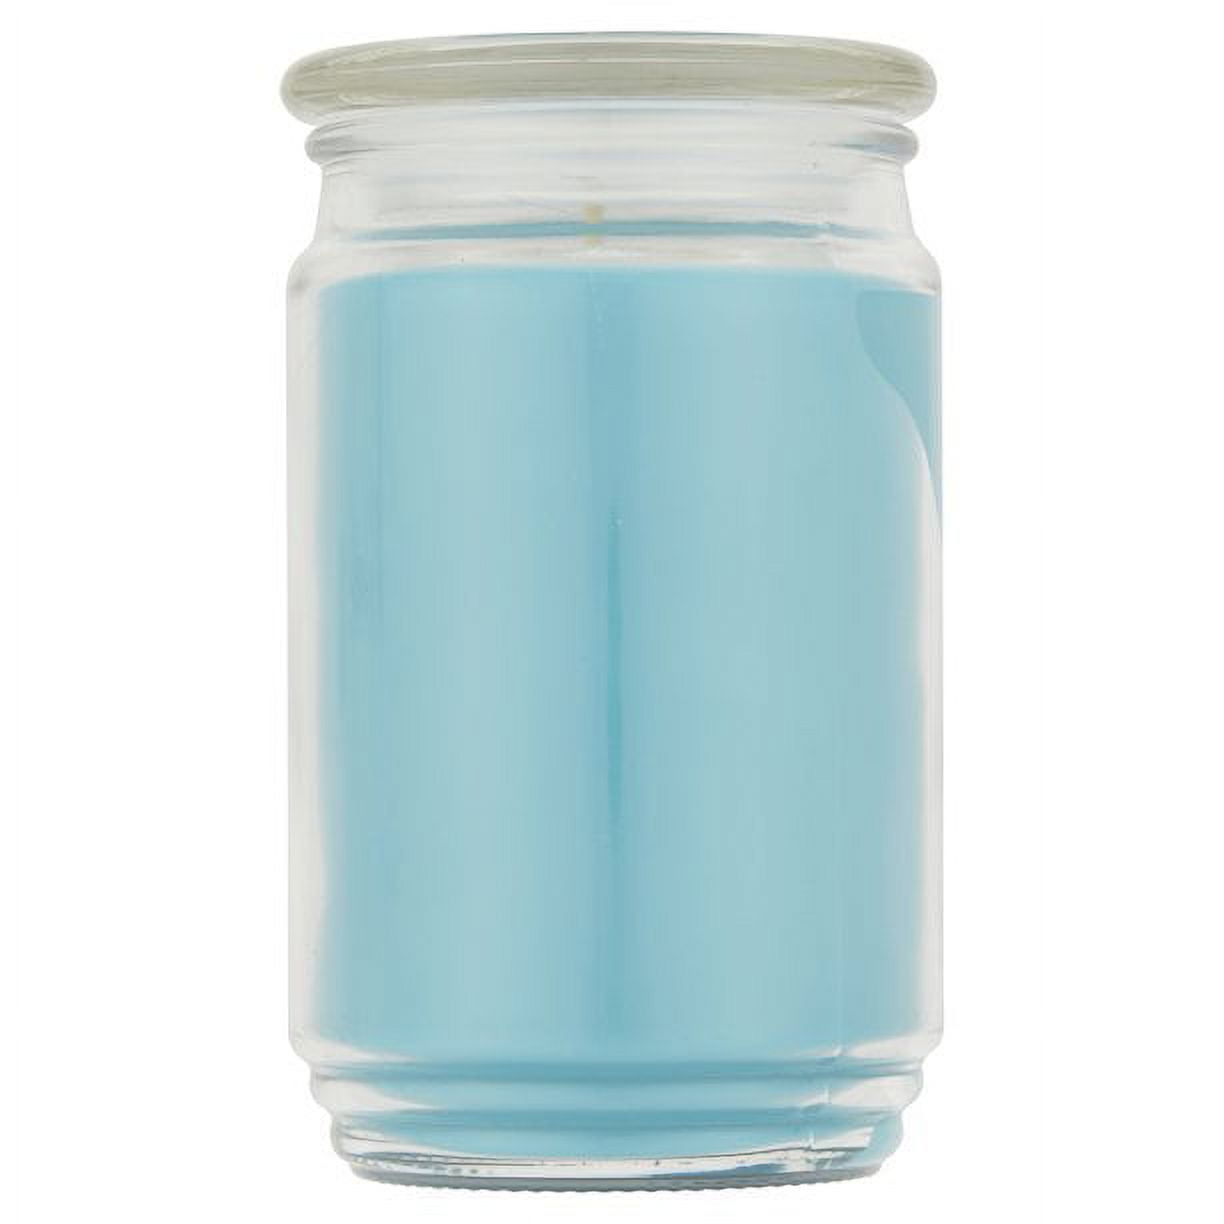 12 oz Clear Glass Jar Candle - Lake Life Tega Cay SC – Garand Candles